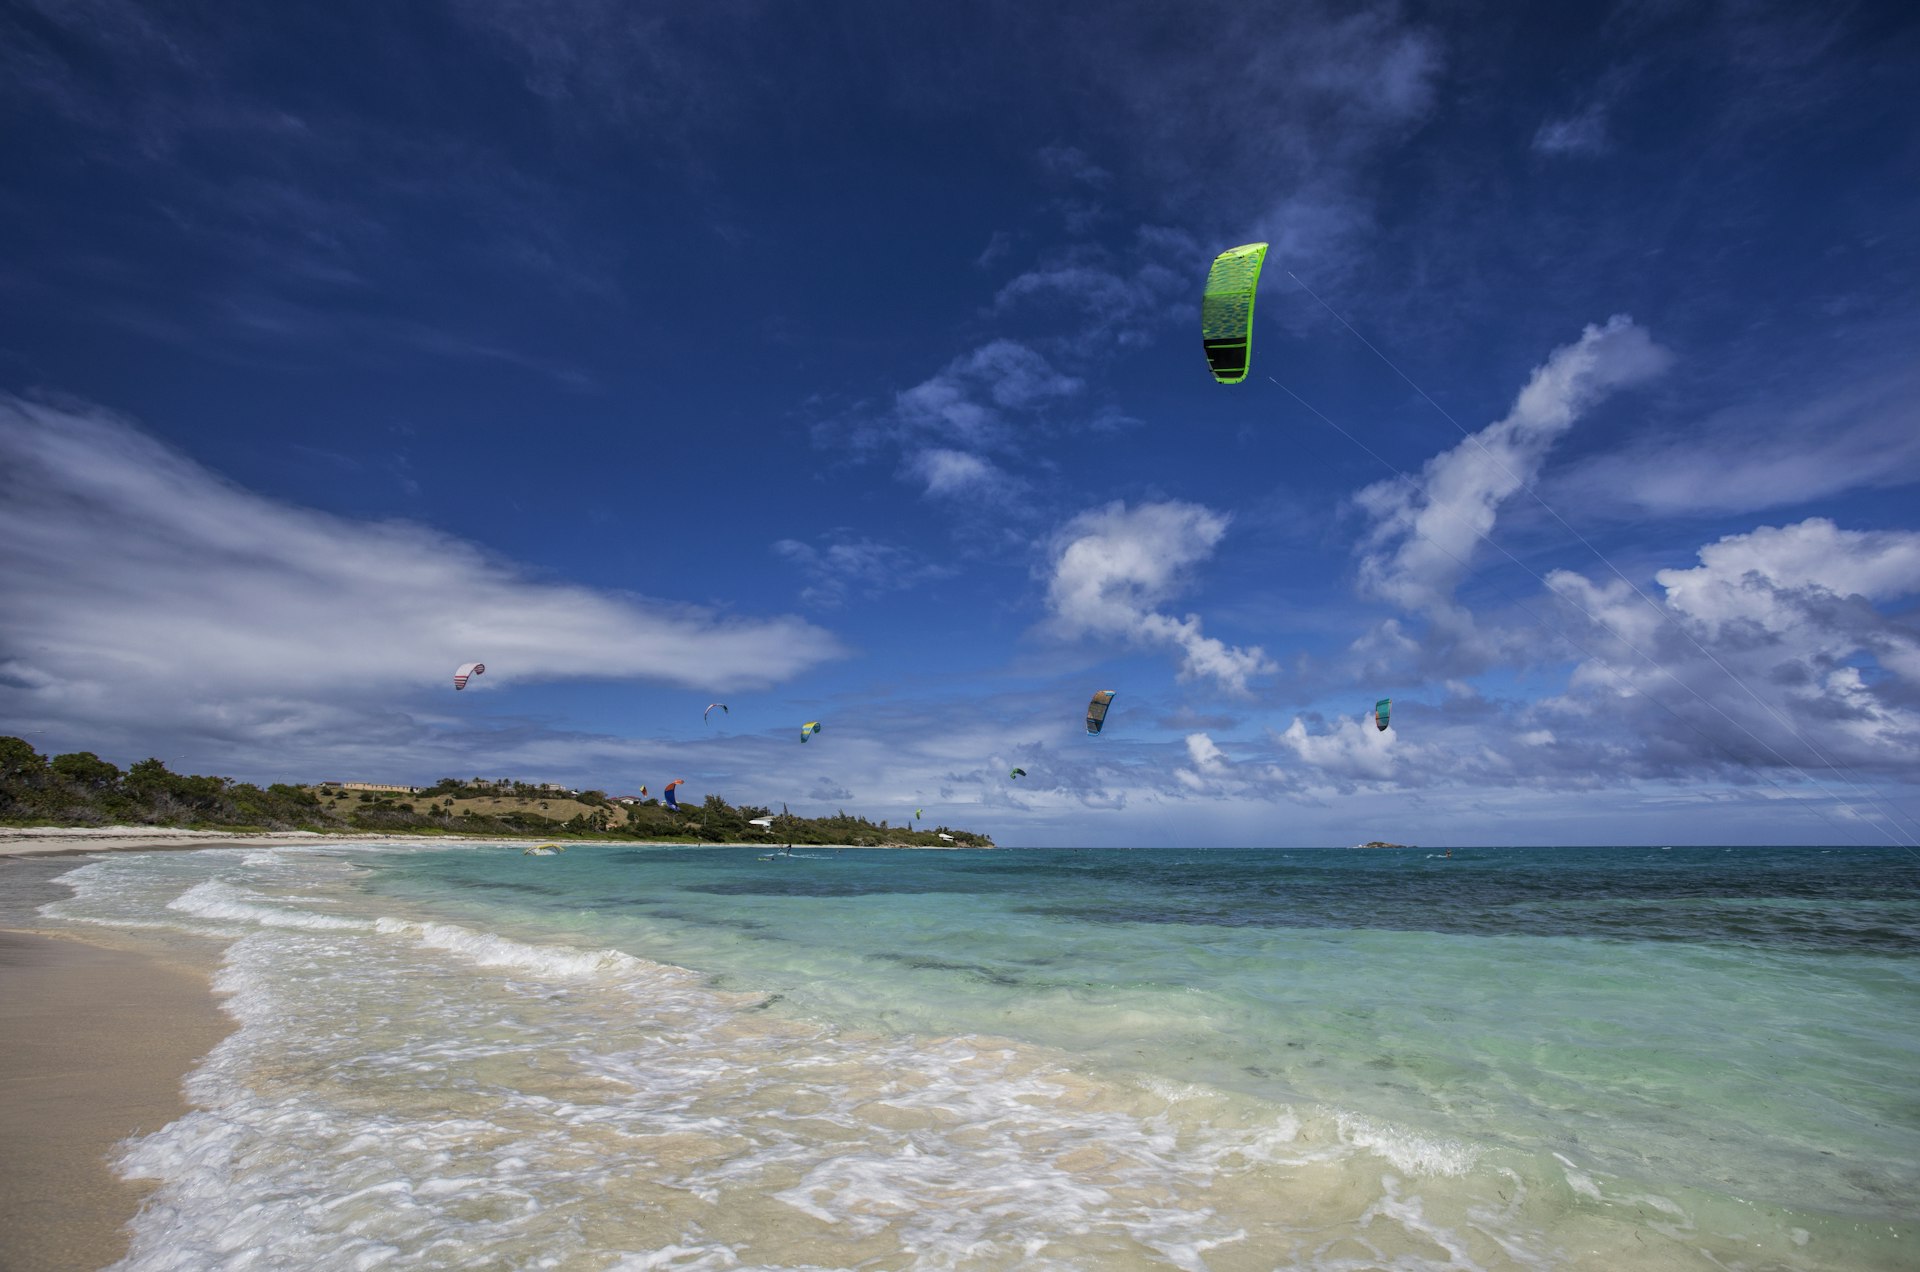 Kitesurfers soar above azure waters at Jabberwock Beach in Antigua